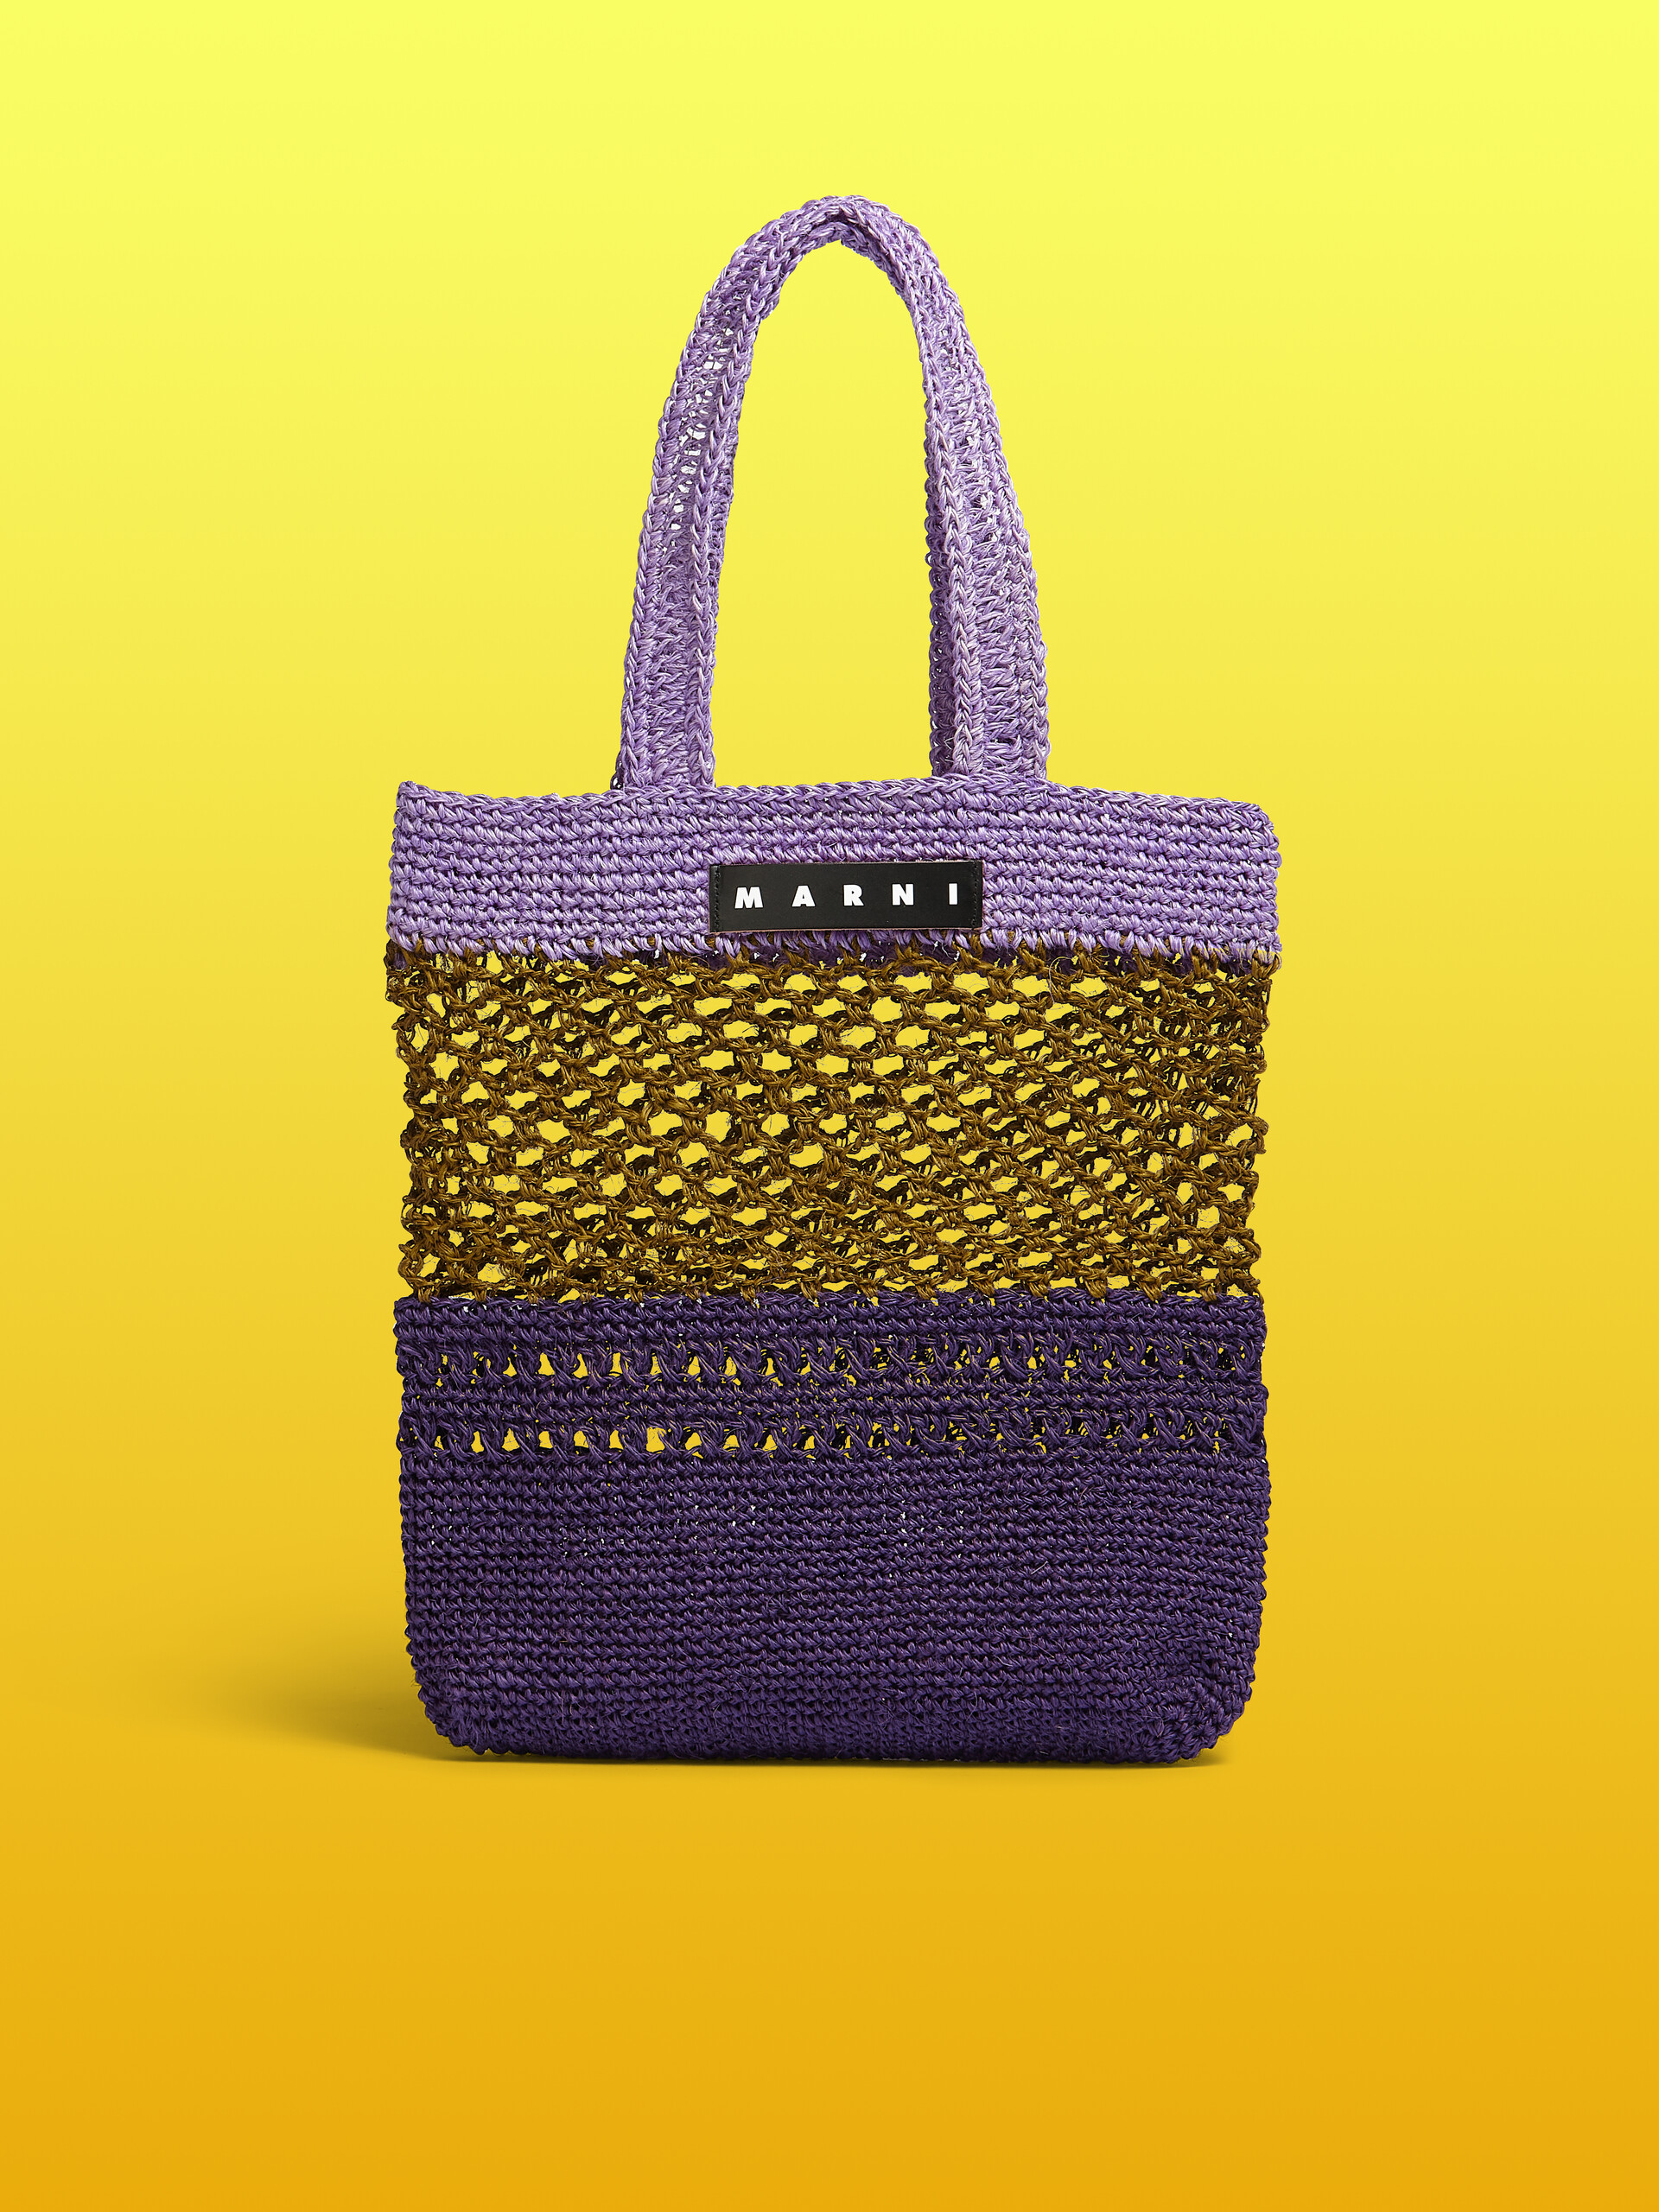 MARNI MARKET bag in purple and green natural fiber - Bags - Image 1